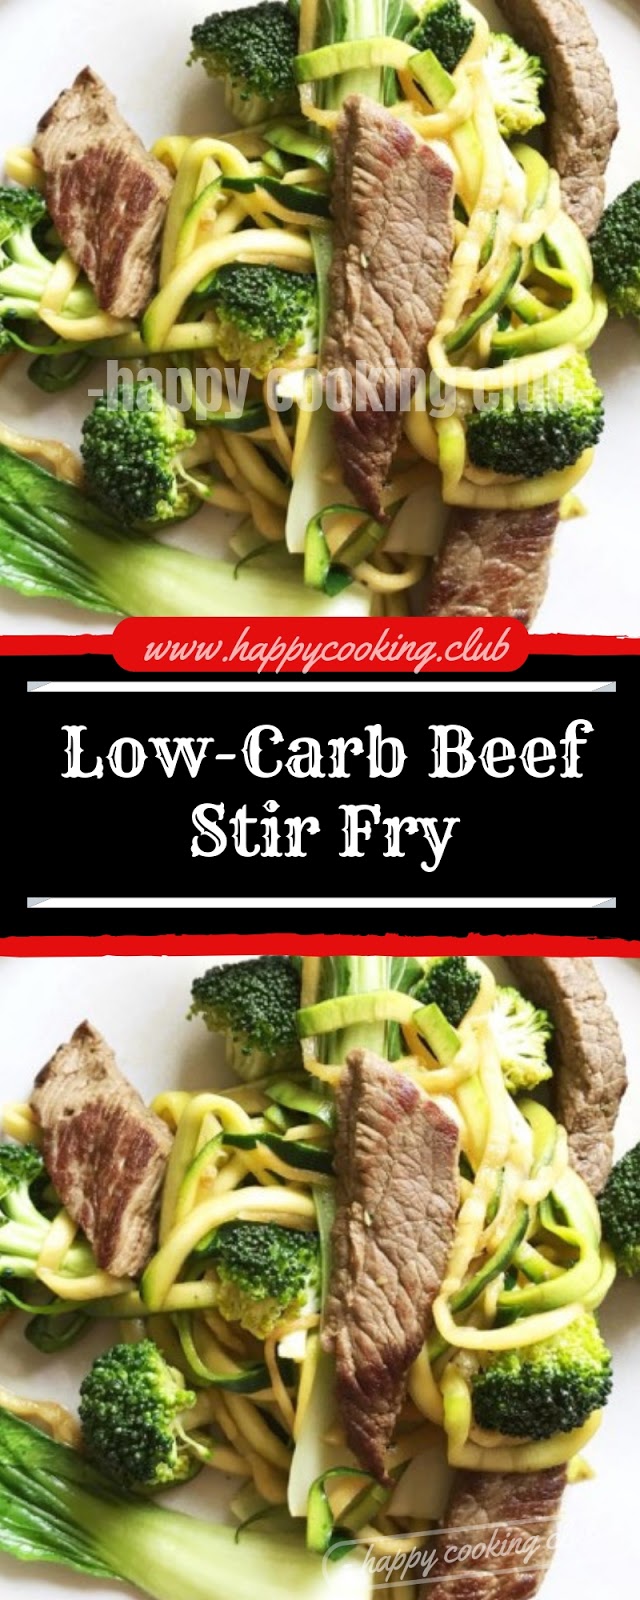 Low-Carb Beef Stir Fry